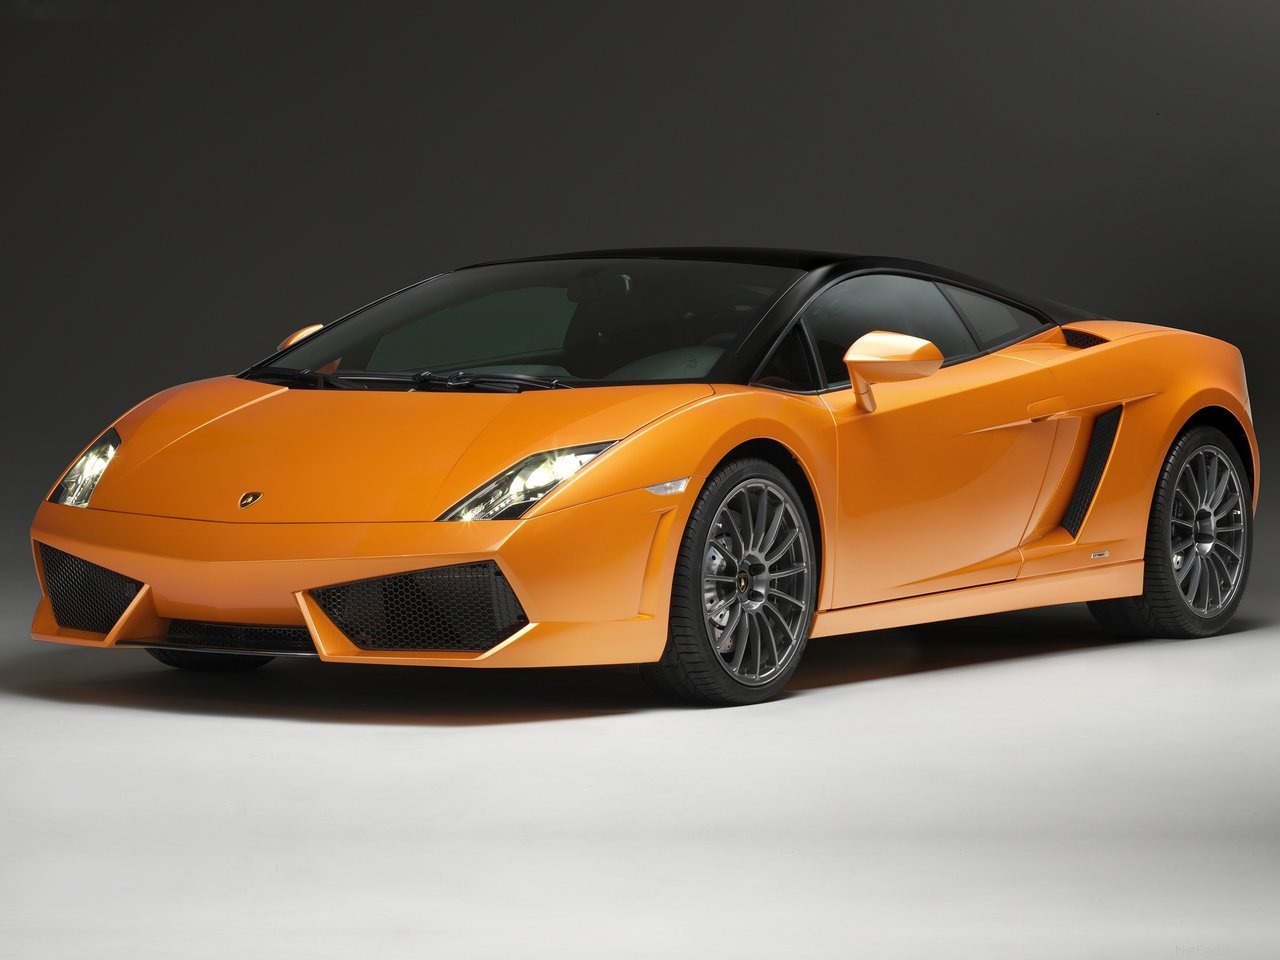 Lamborghini Gallardo Rental Price